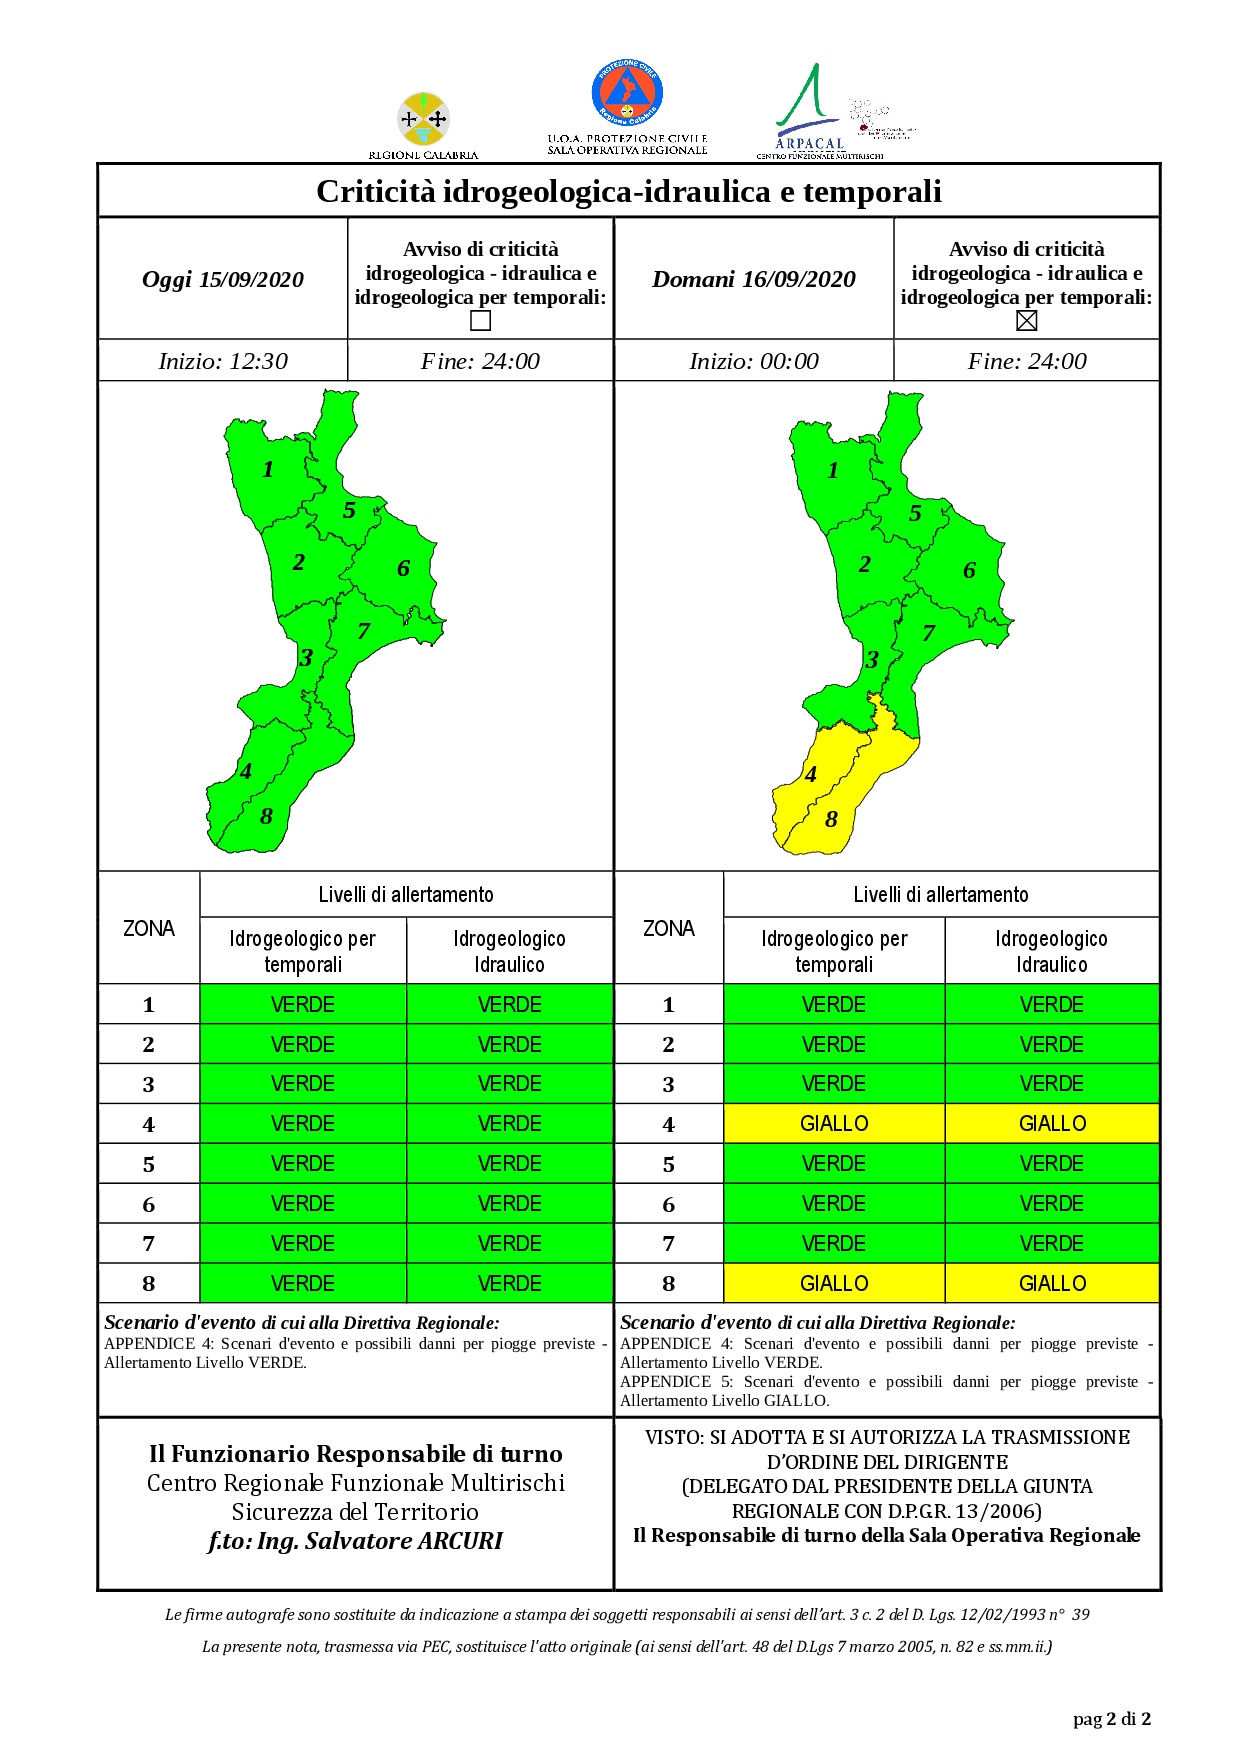 Criticità idrogeologica-idraulica e temporali in Calabria 15-09-2020